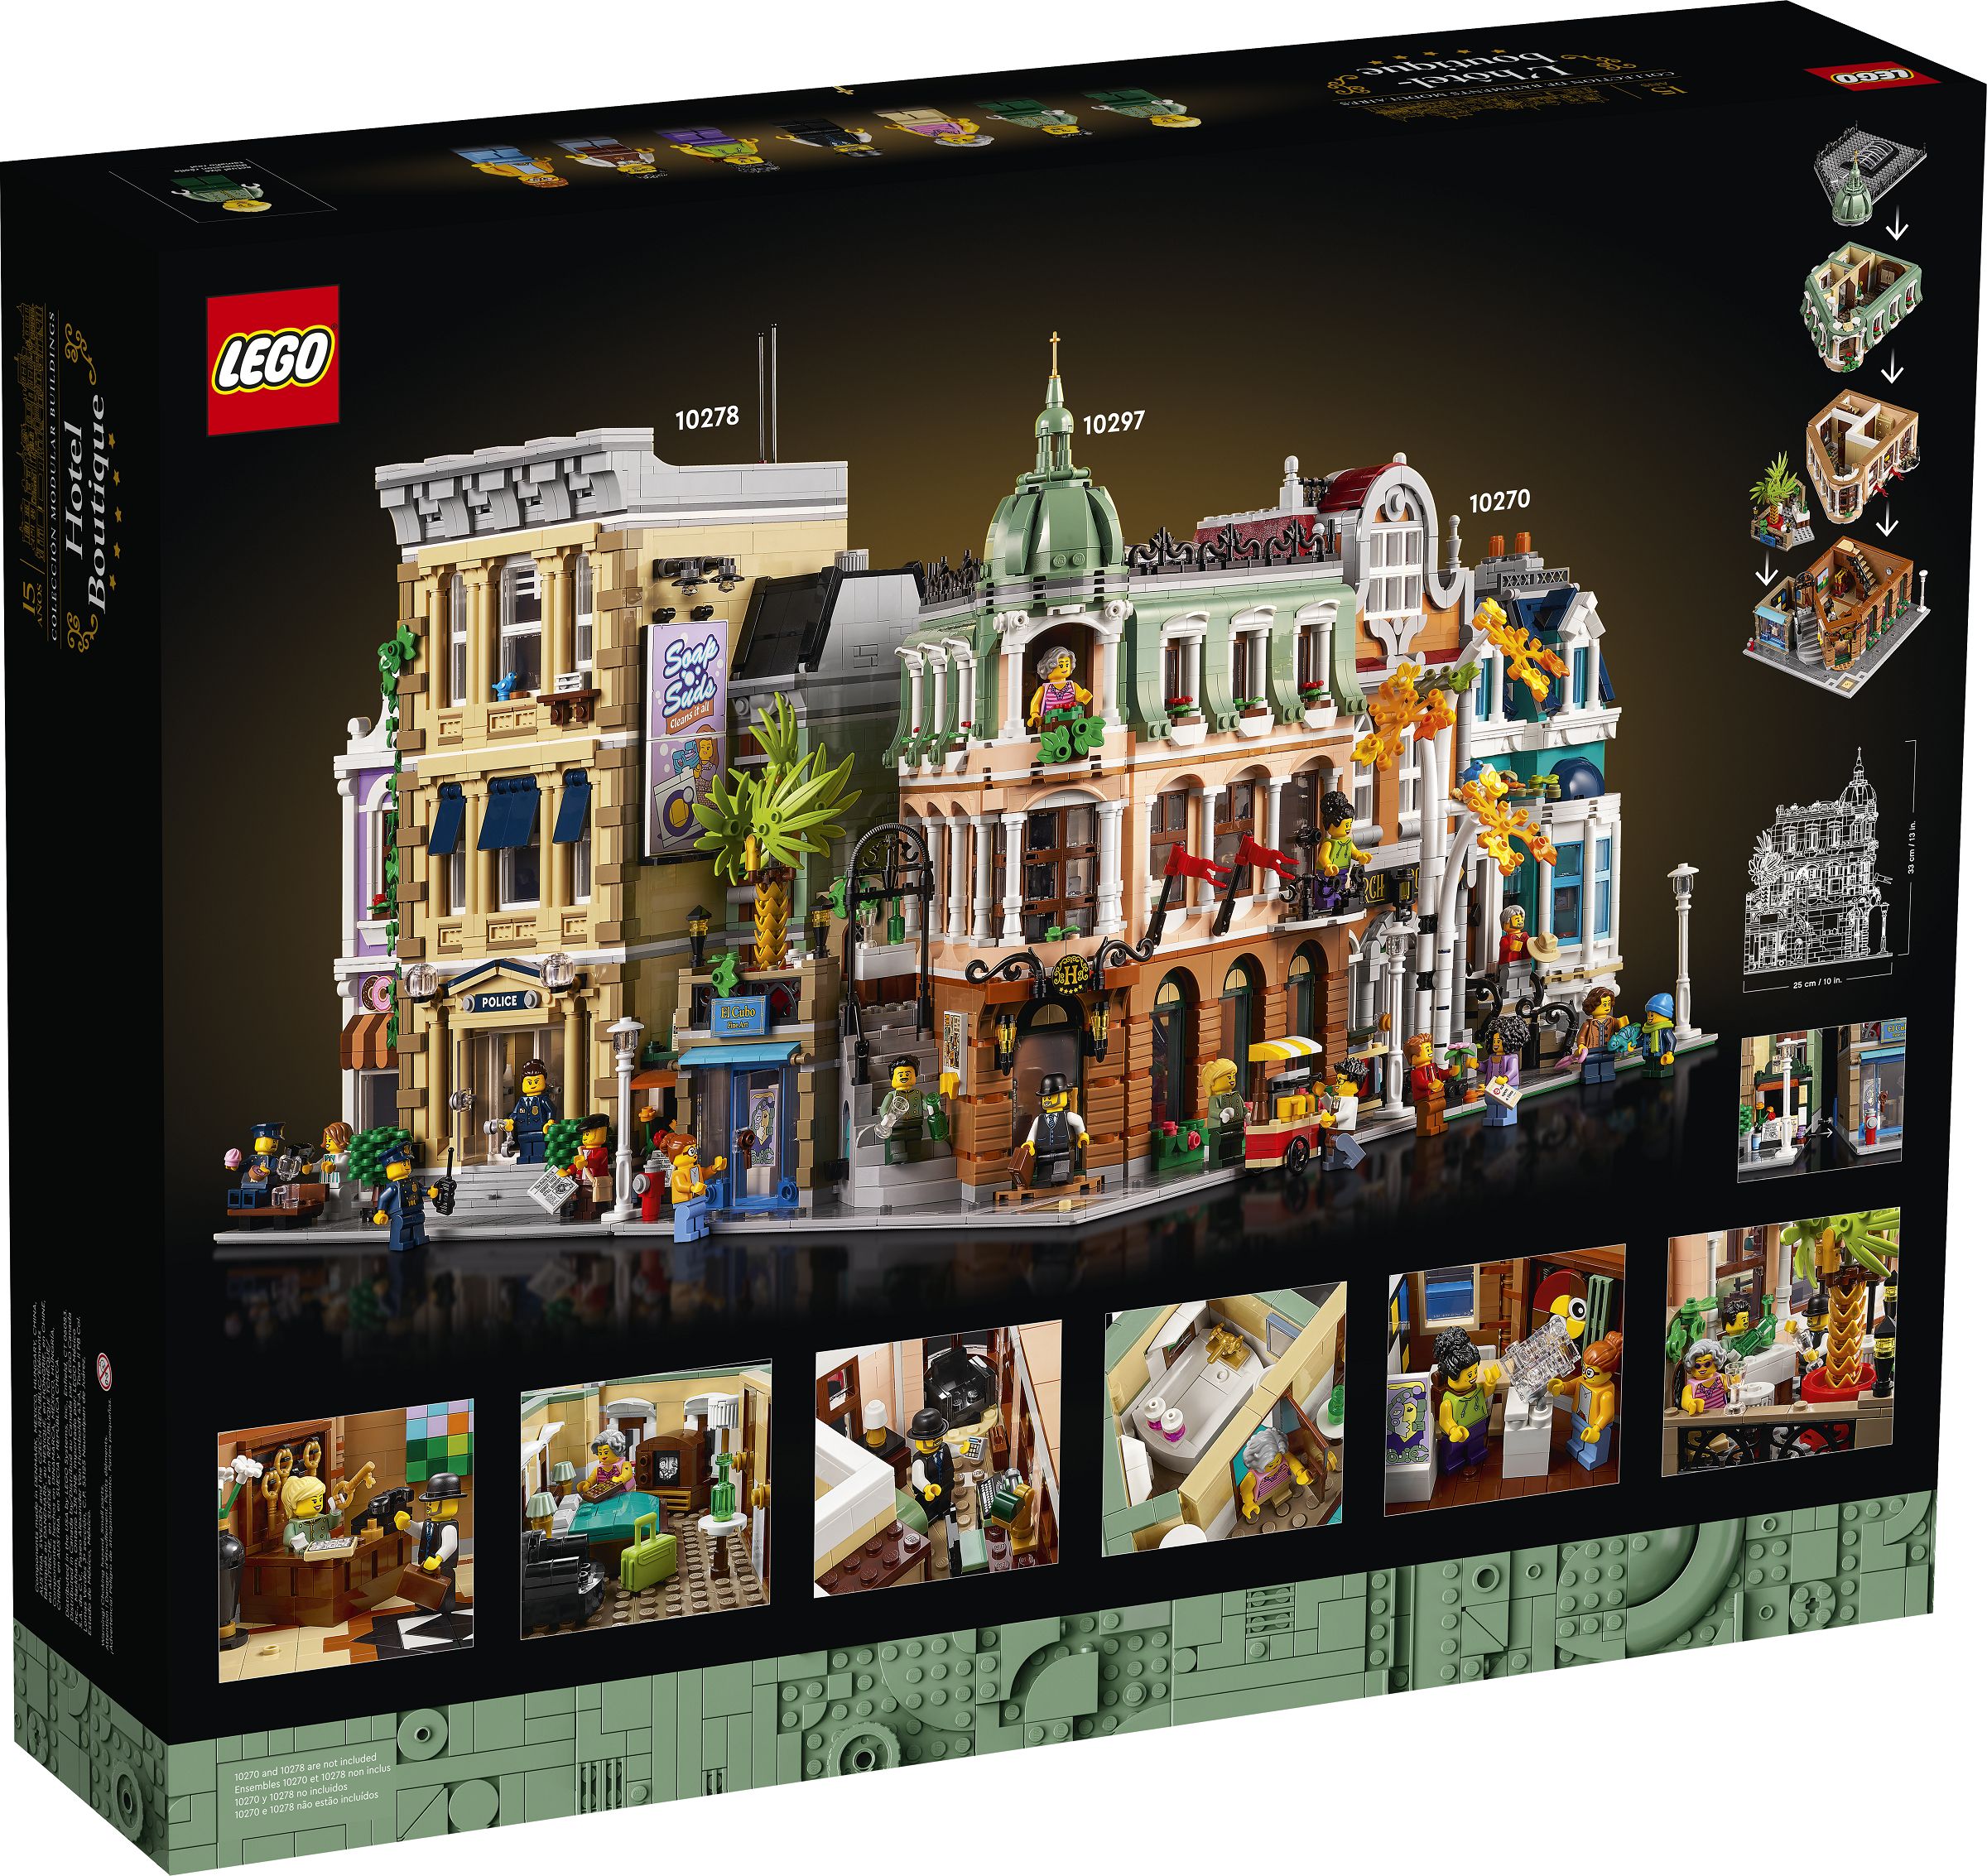 LEGO Advanced Models 10297 Boutique-Hotel LEGO_10297_alt9.jpg